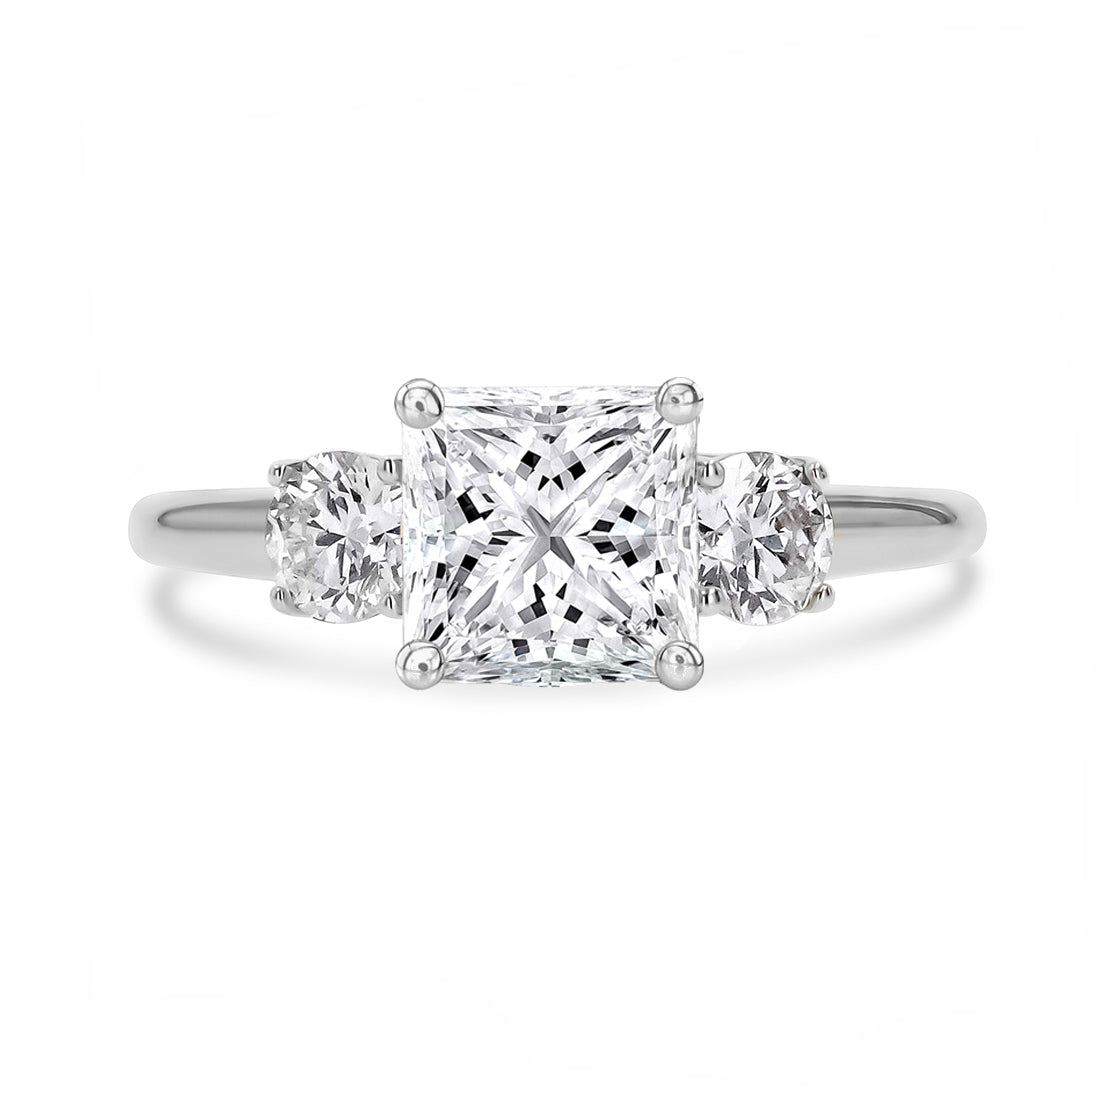 The Skeie's Three Stone Engagement Ring - Skeie's Jewelers